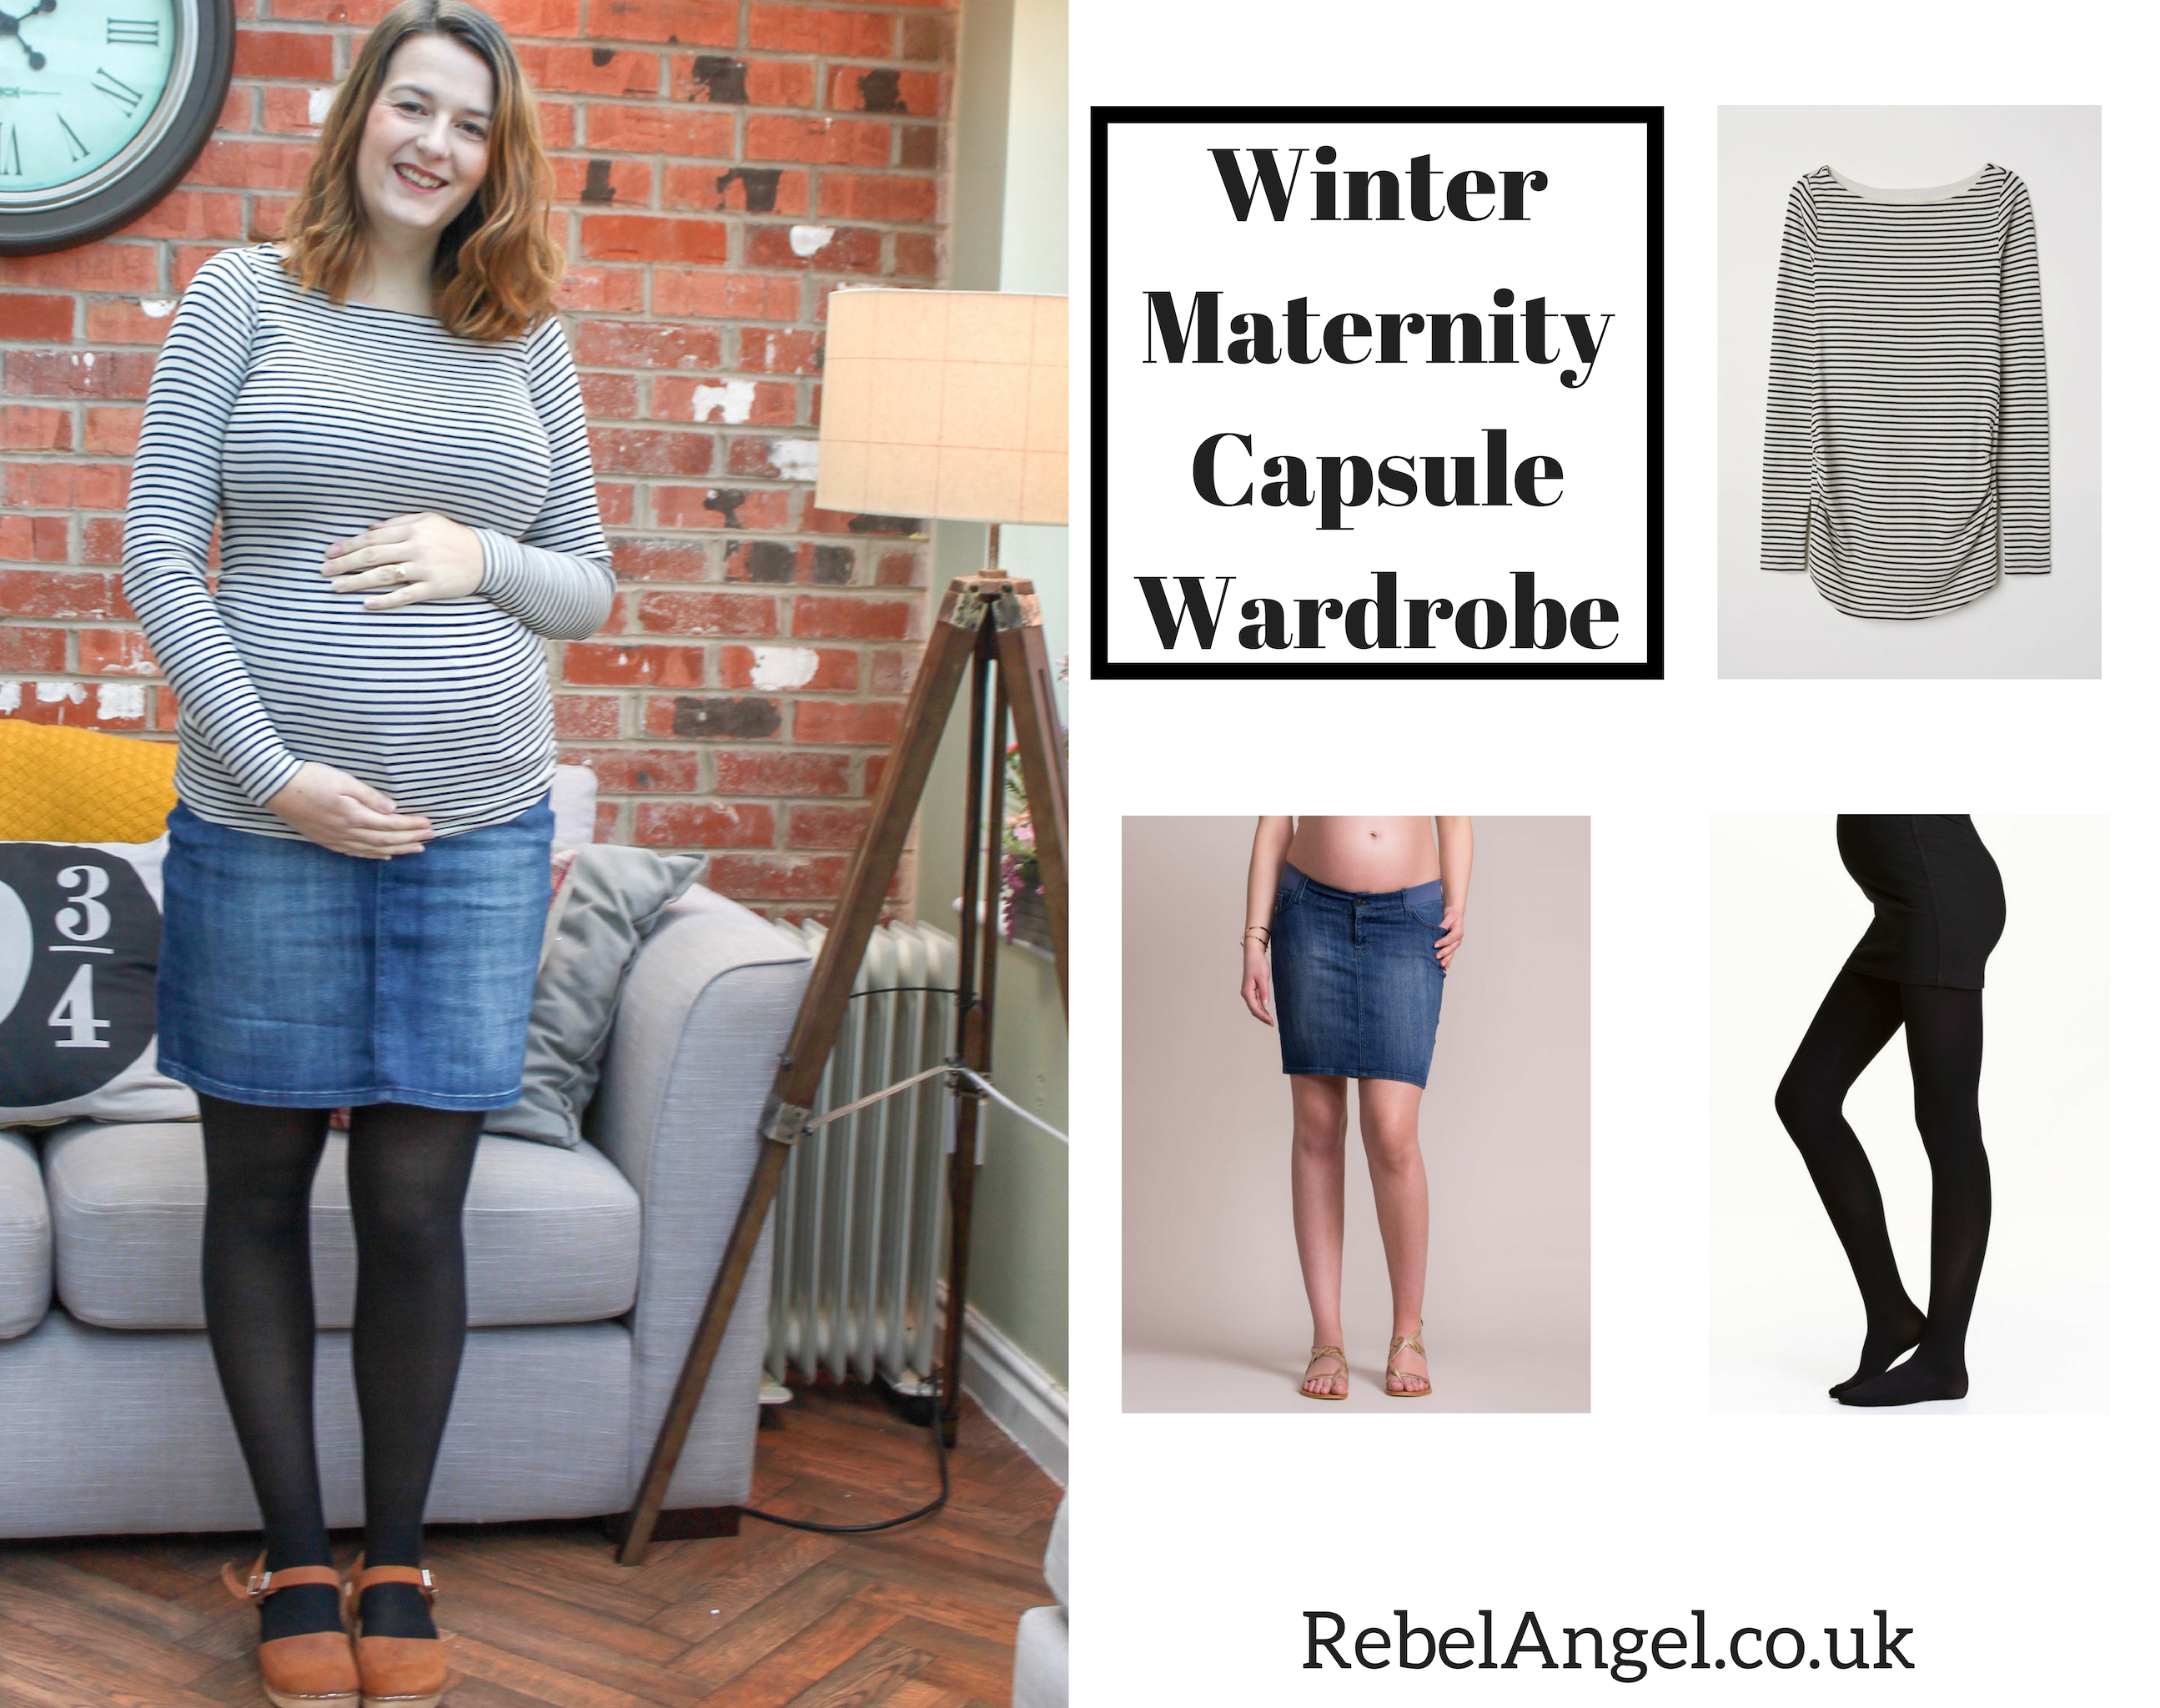 Winter Maternity Capsule Wardrobe - striped top and denim skirt